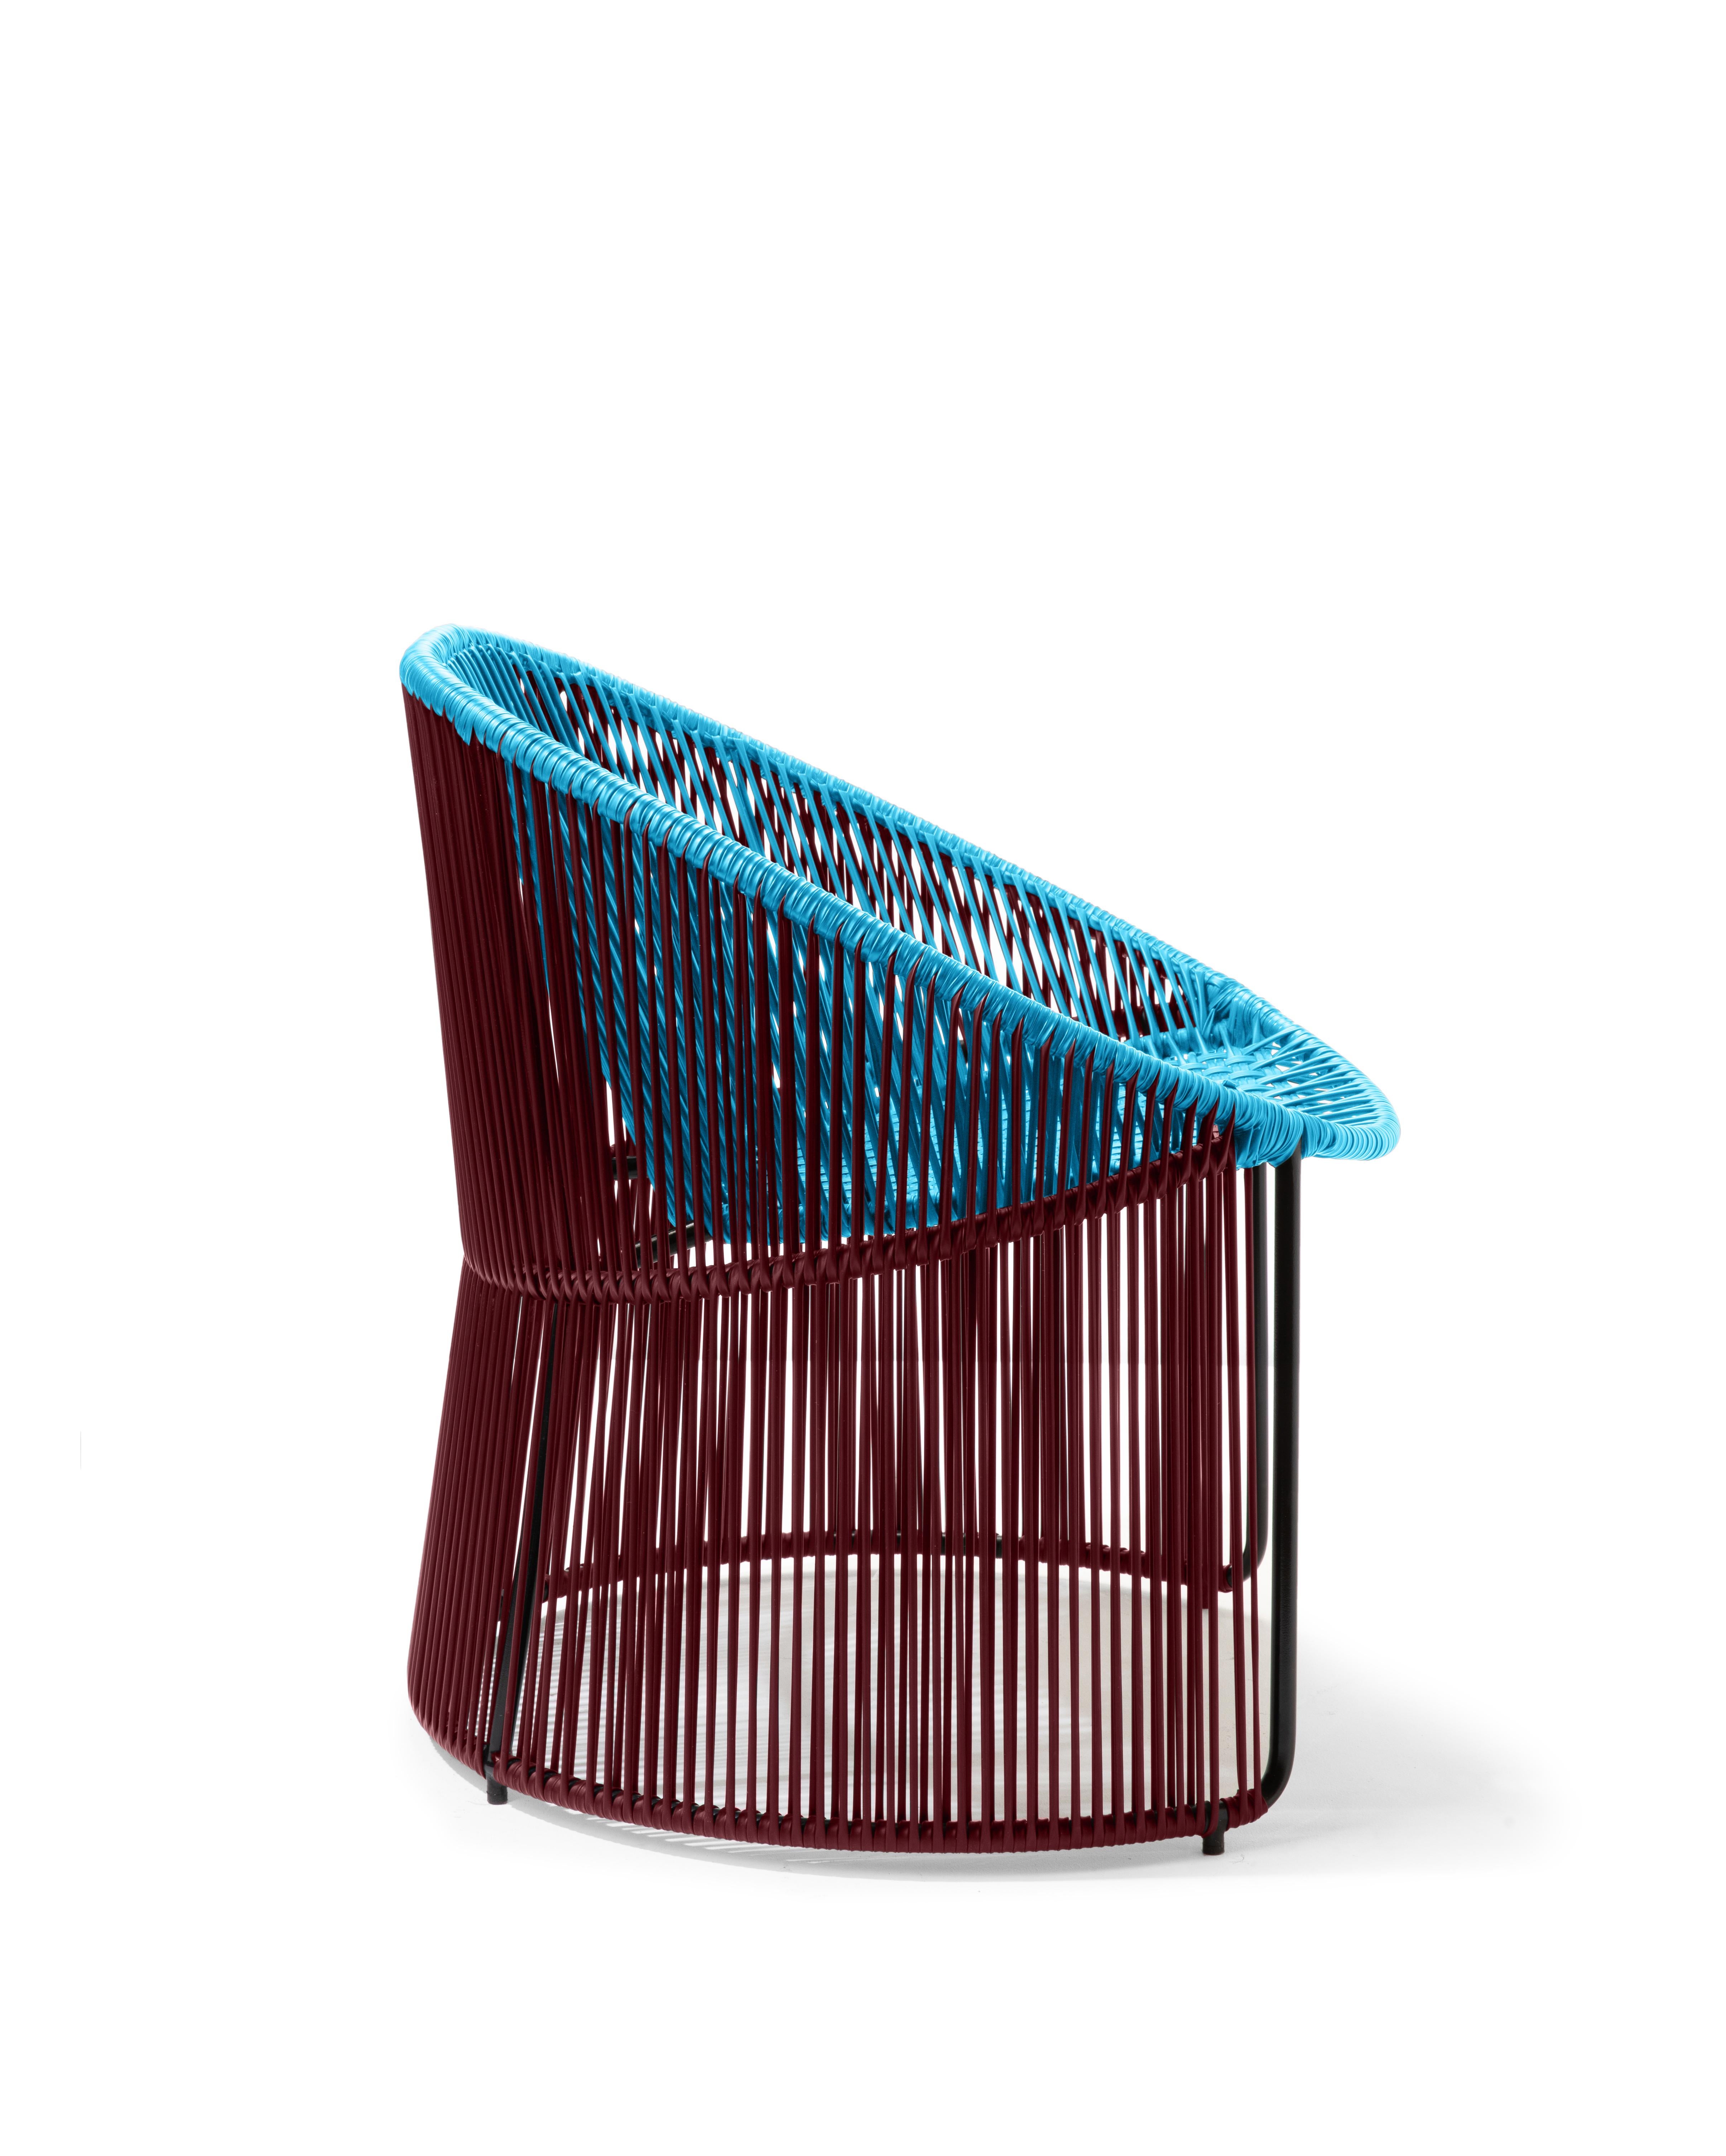 German Set of 4 Blue Cartagenas Lounge Chair by Sebastian Herkner For Sale